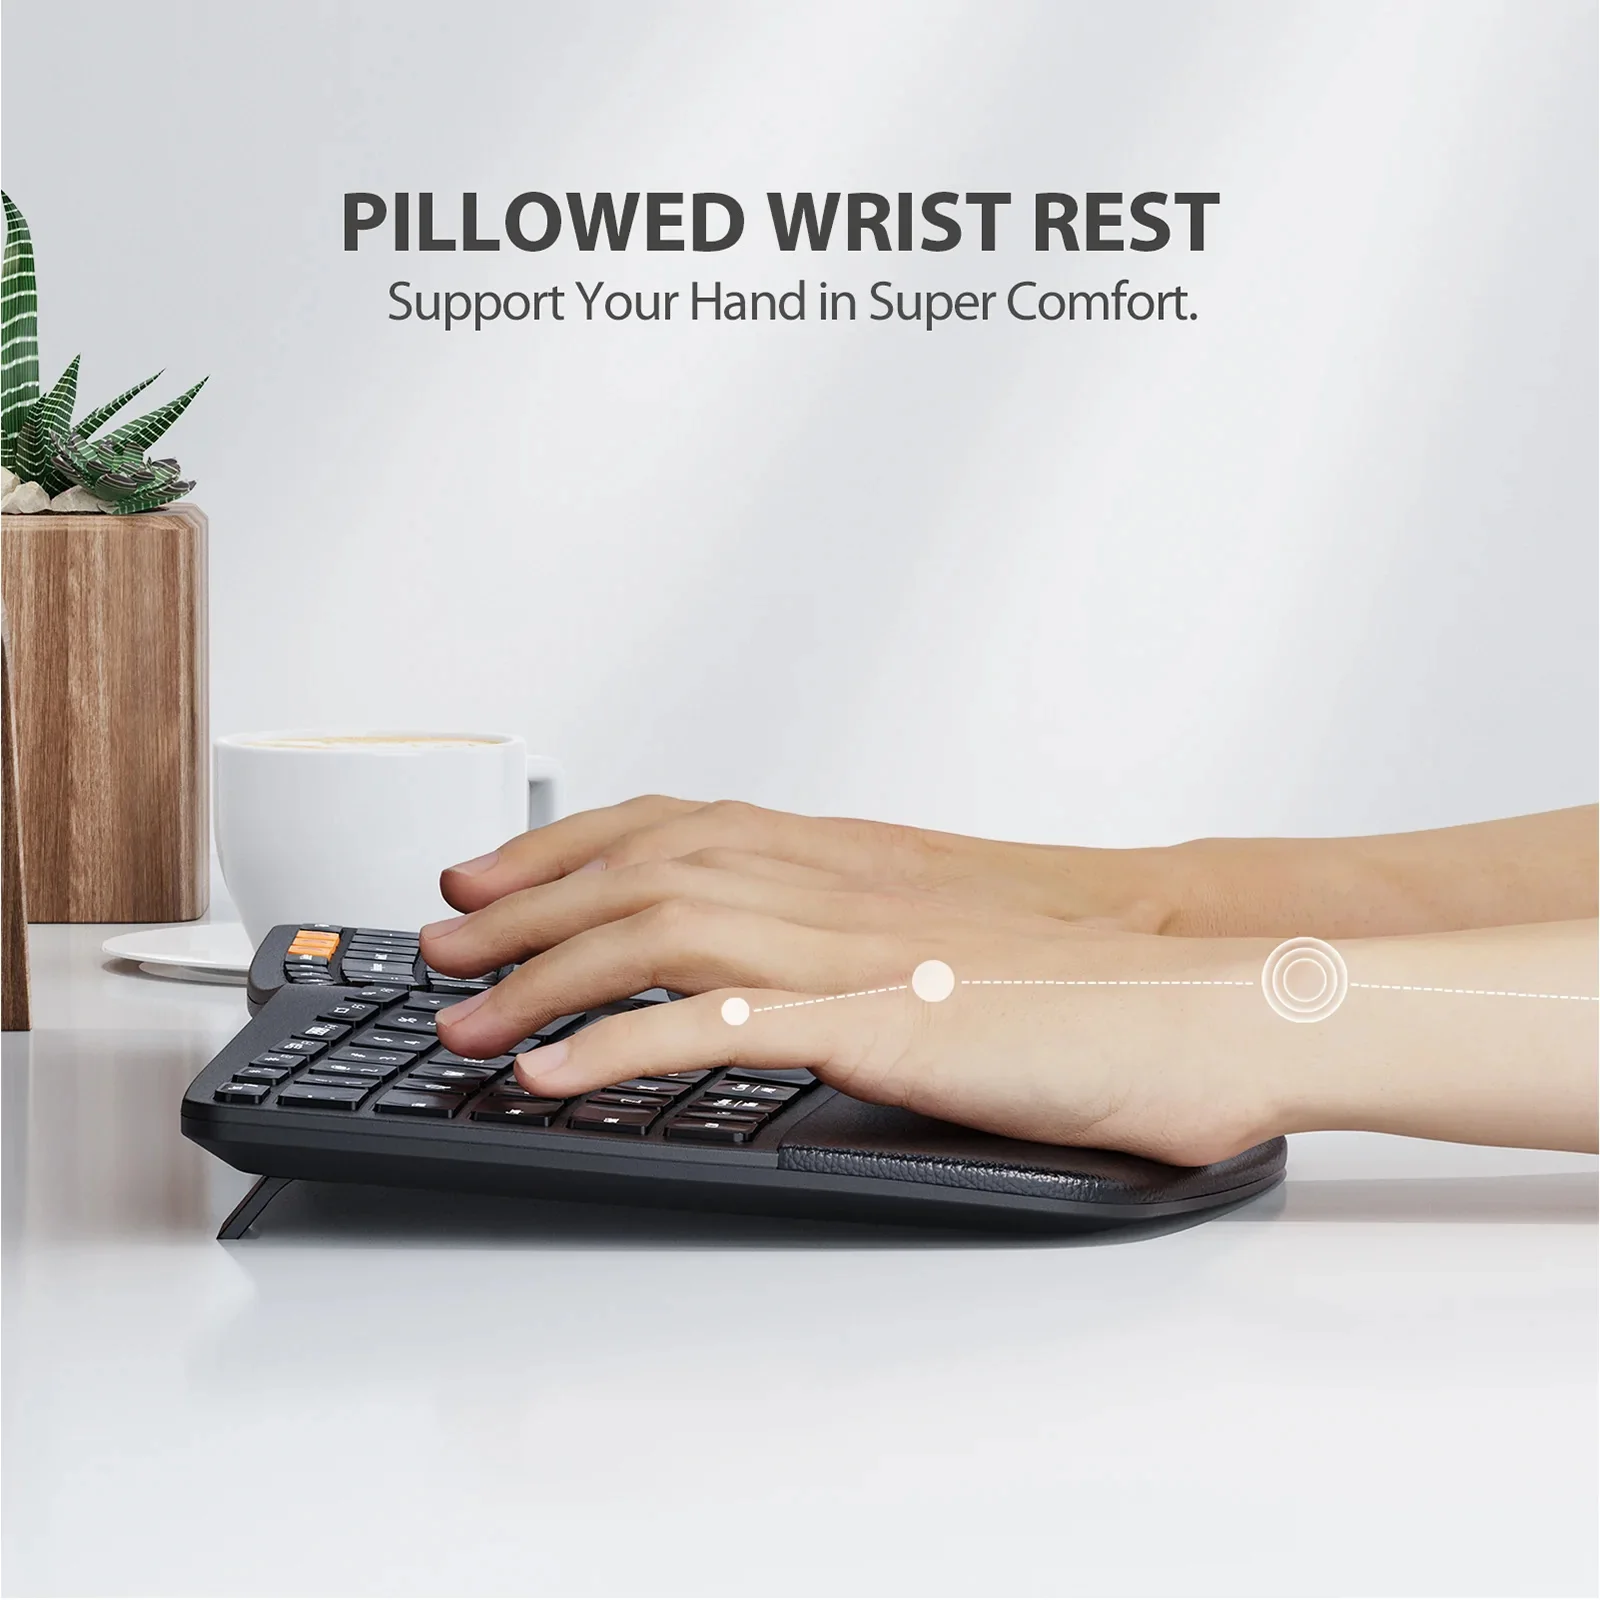 ProtoArc EK01 Bluetooth Split Keyboard with Wrist Rest Rechargeable Backlit Wireless Ergonomic Keyboard for Windows Mac Android images - 6